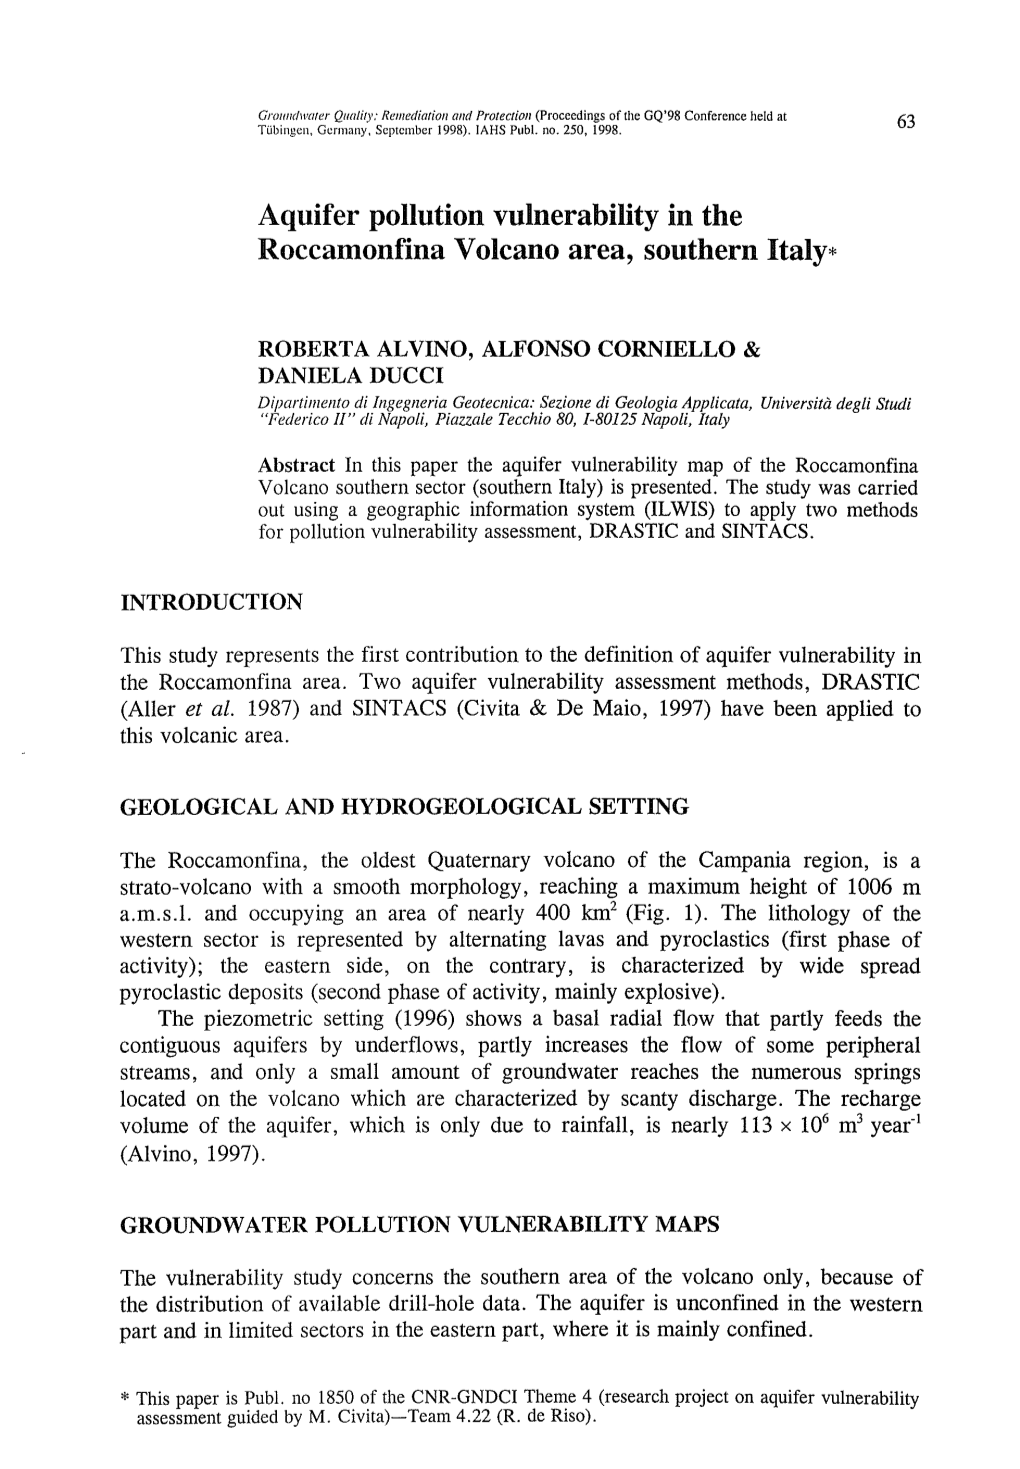 Aquifer Pollution Vulnerability in the Roccamonfina Volcano Area, Southern Italy*